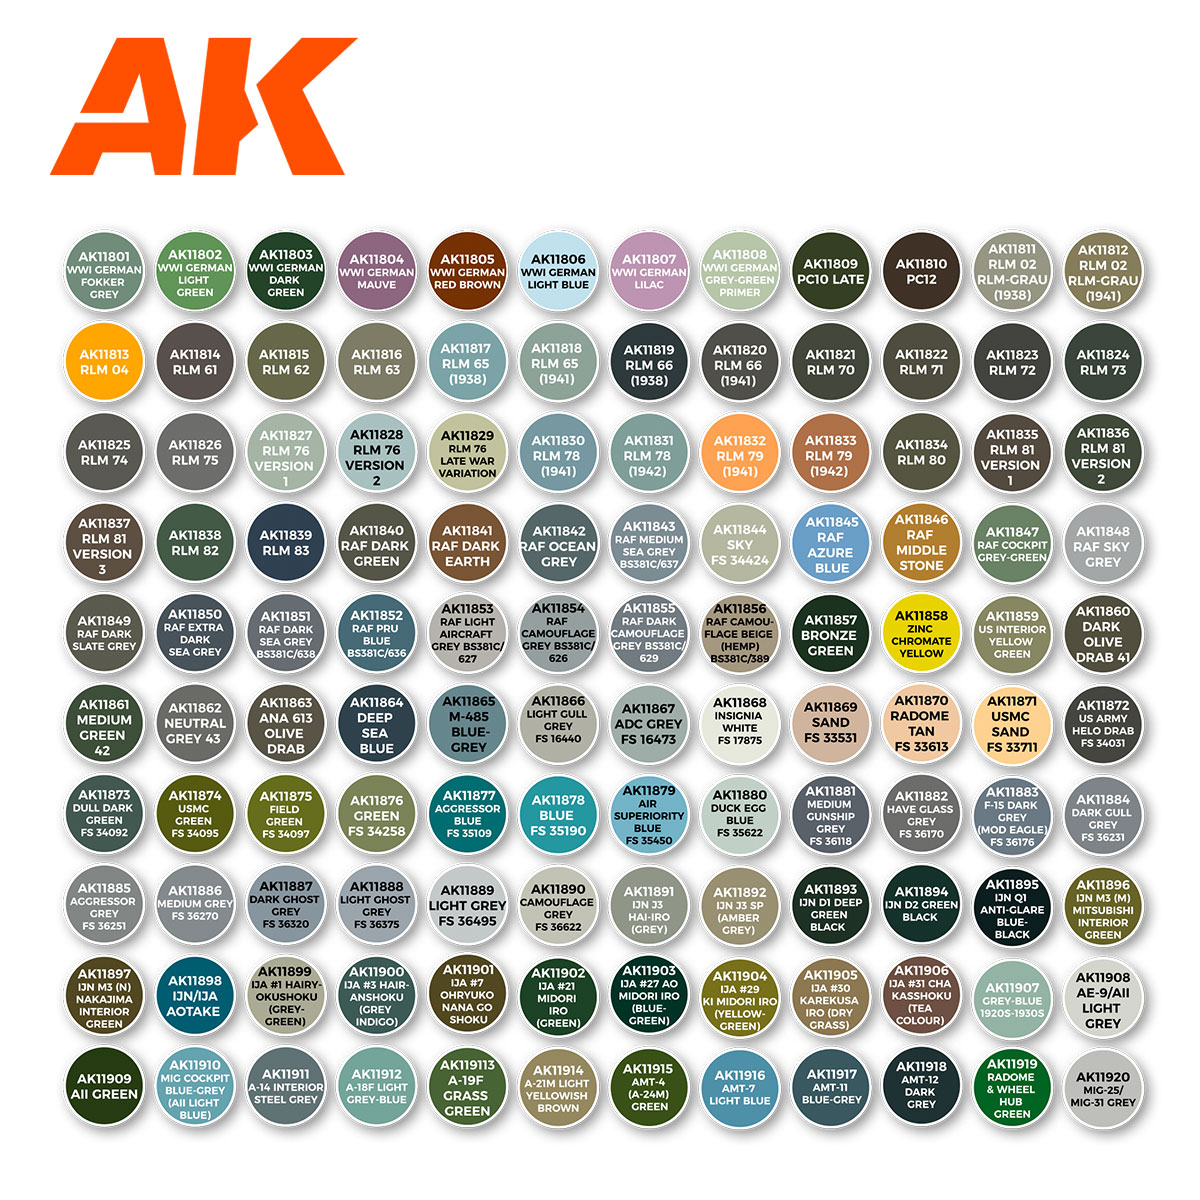 Ak Interactive 3 Generation Acrylic Intense Colors Paint Sets :  : Toys & Games